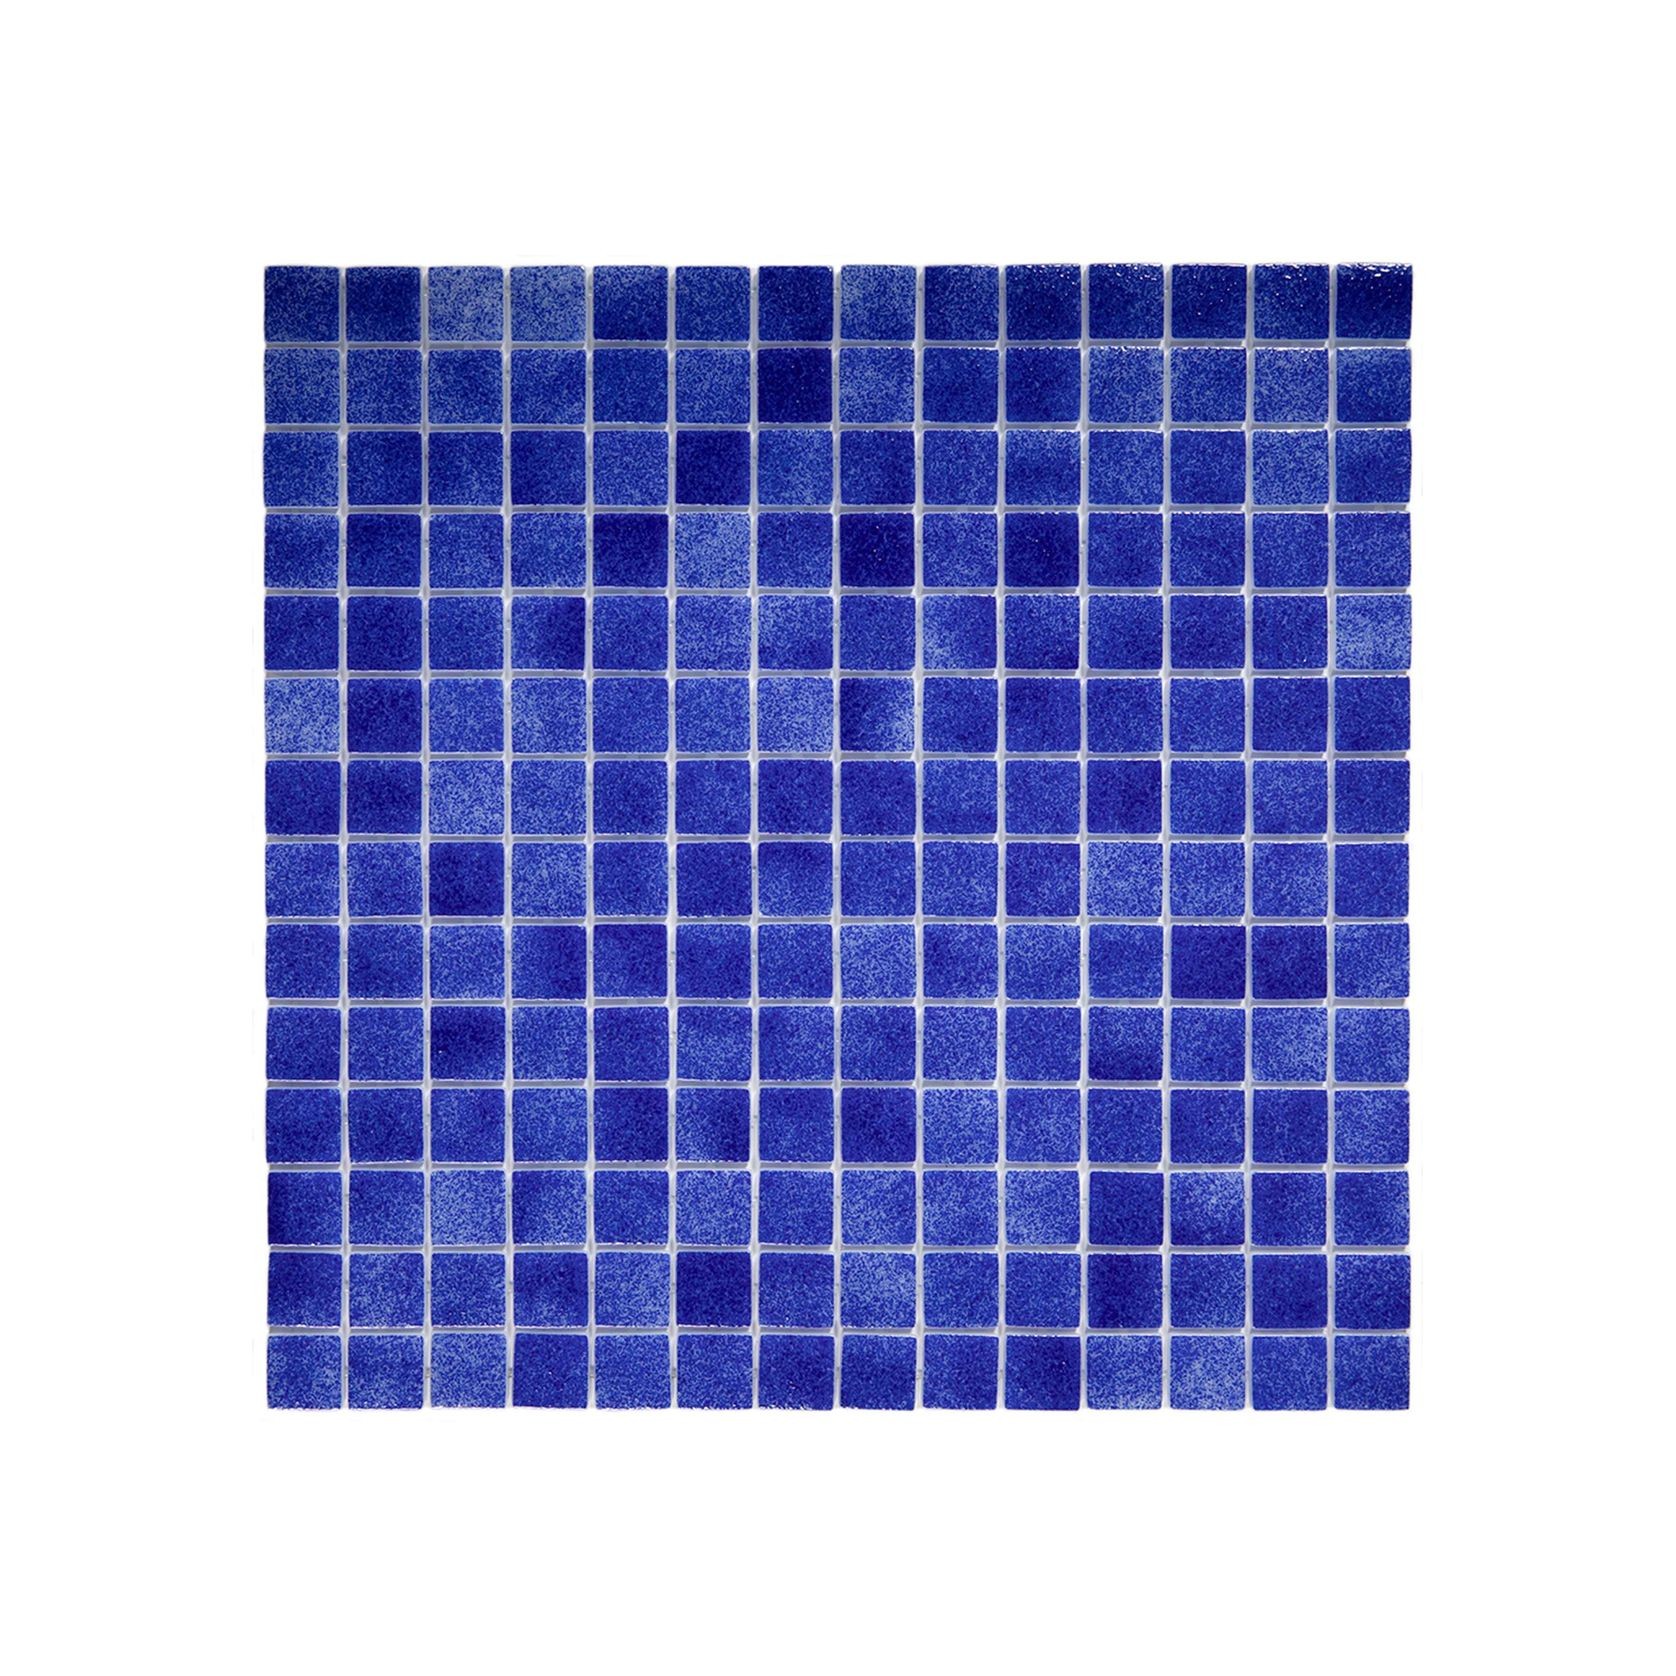 Hisbalit Jonico | Spanish Glass Pool Tiles & Mosaics gallery detail image